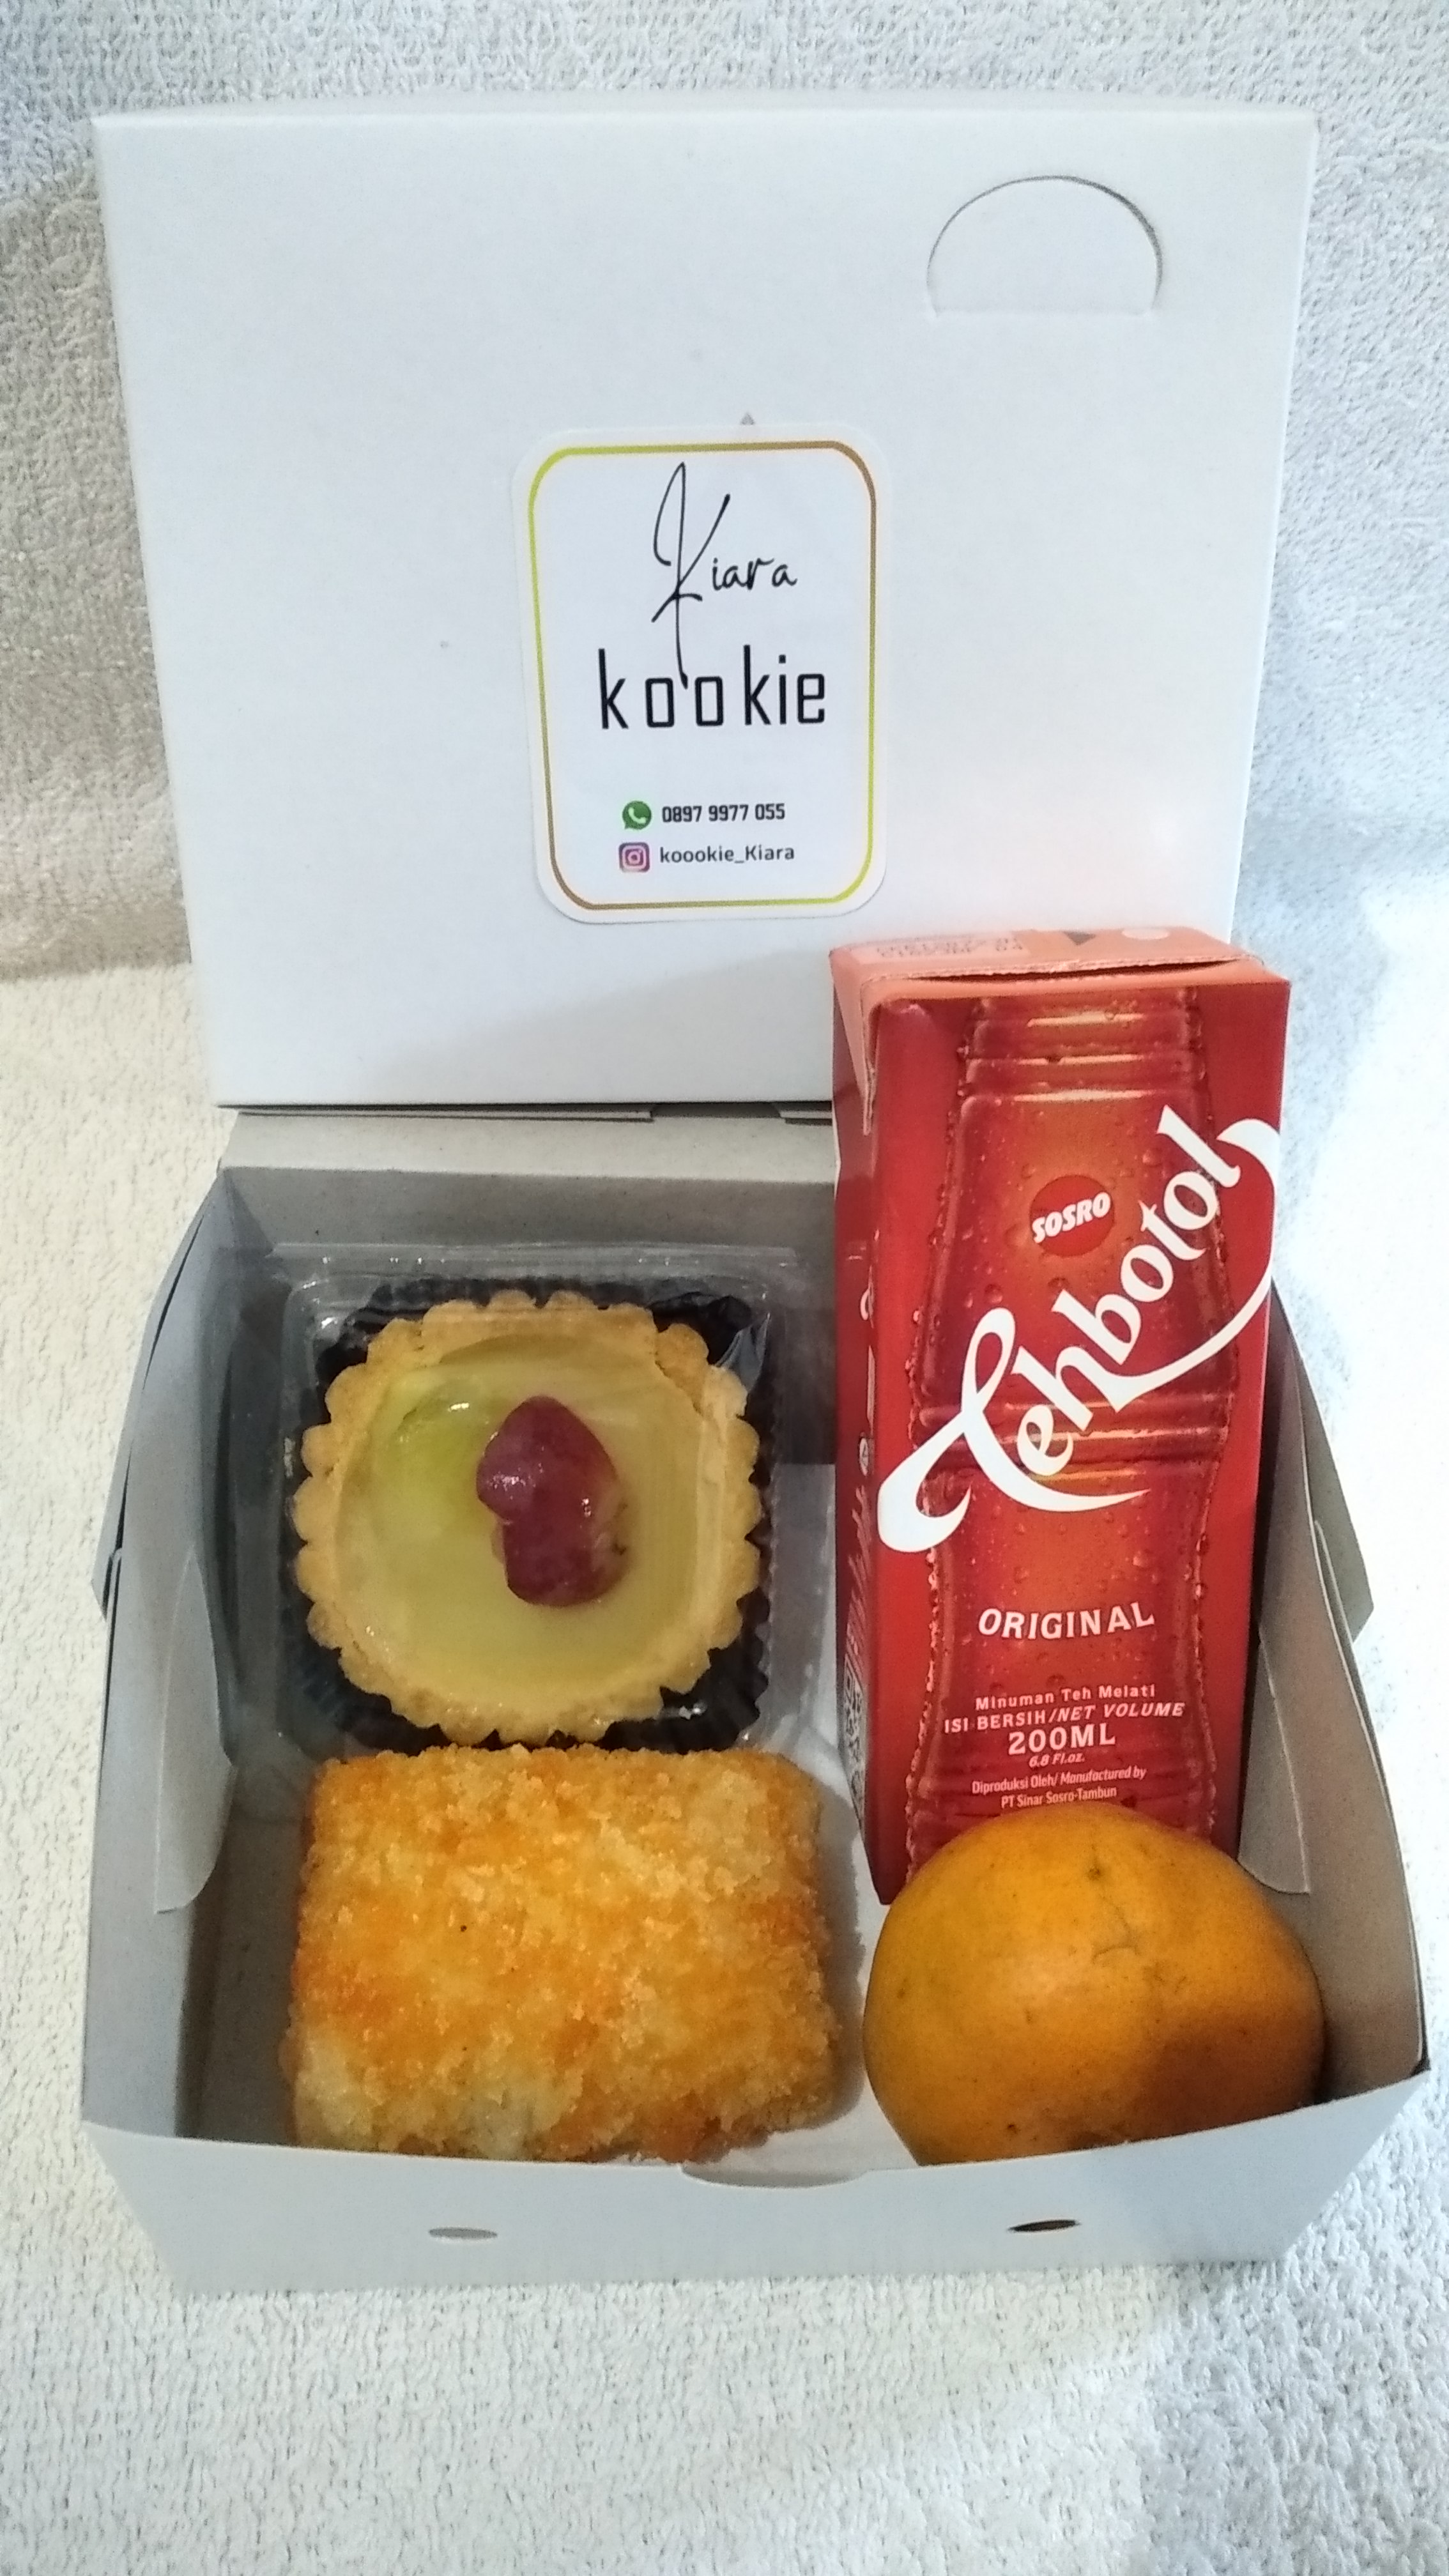 Snack Box by Kookie Kiara